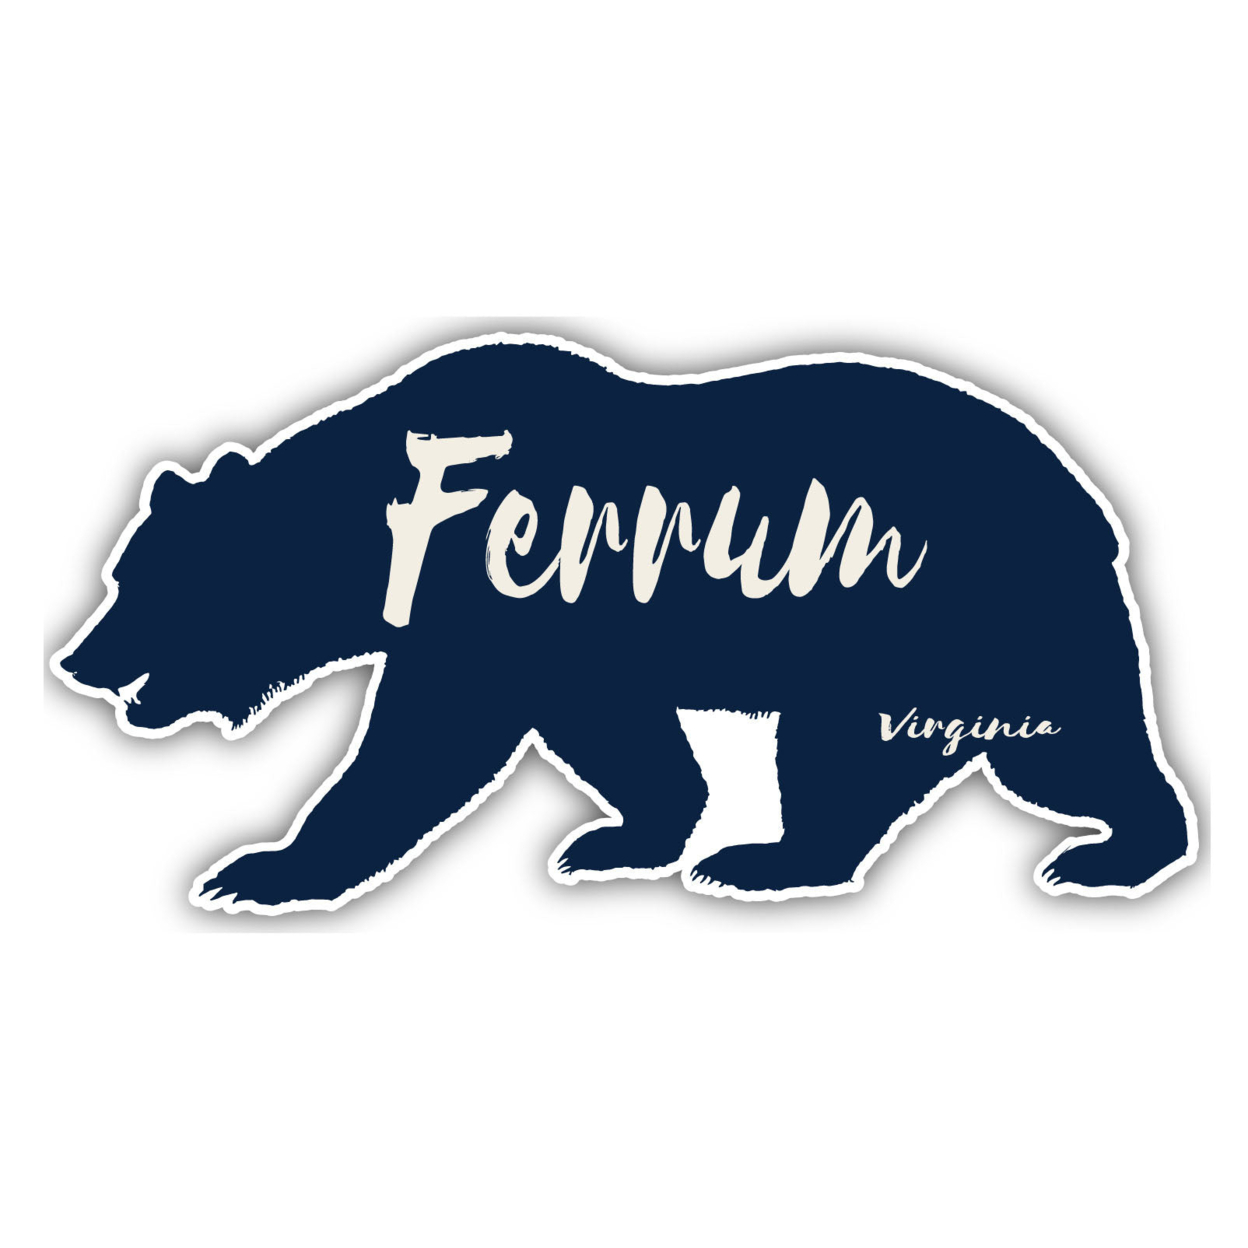 Ferrum Virginia Souvenir Decorative Stickers (Choose Theme And Size) - Single Unit, 10-Inch, Bear